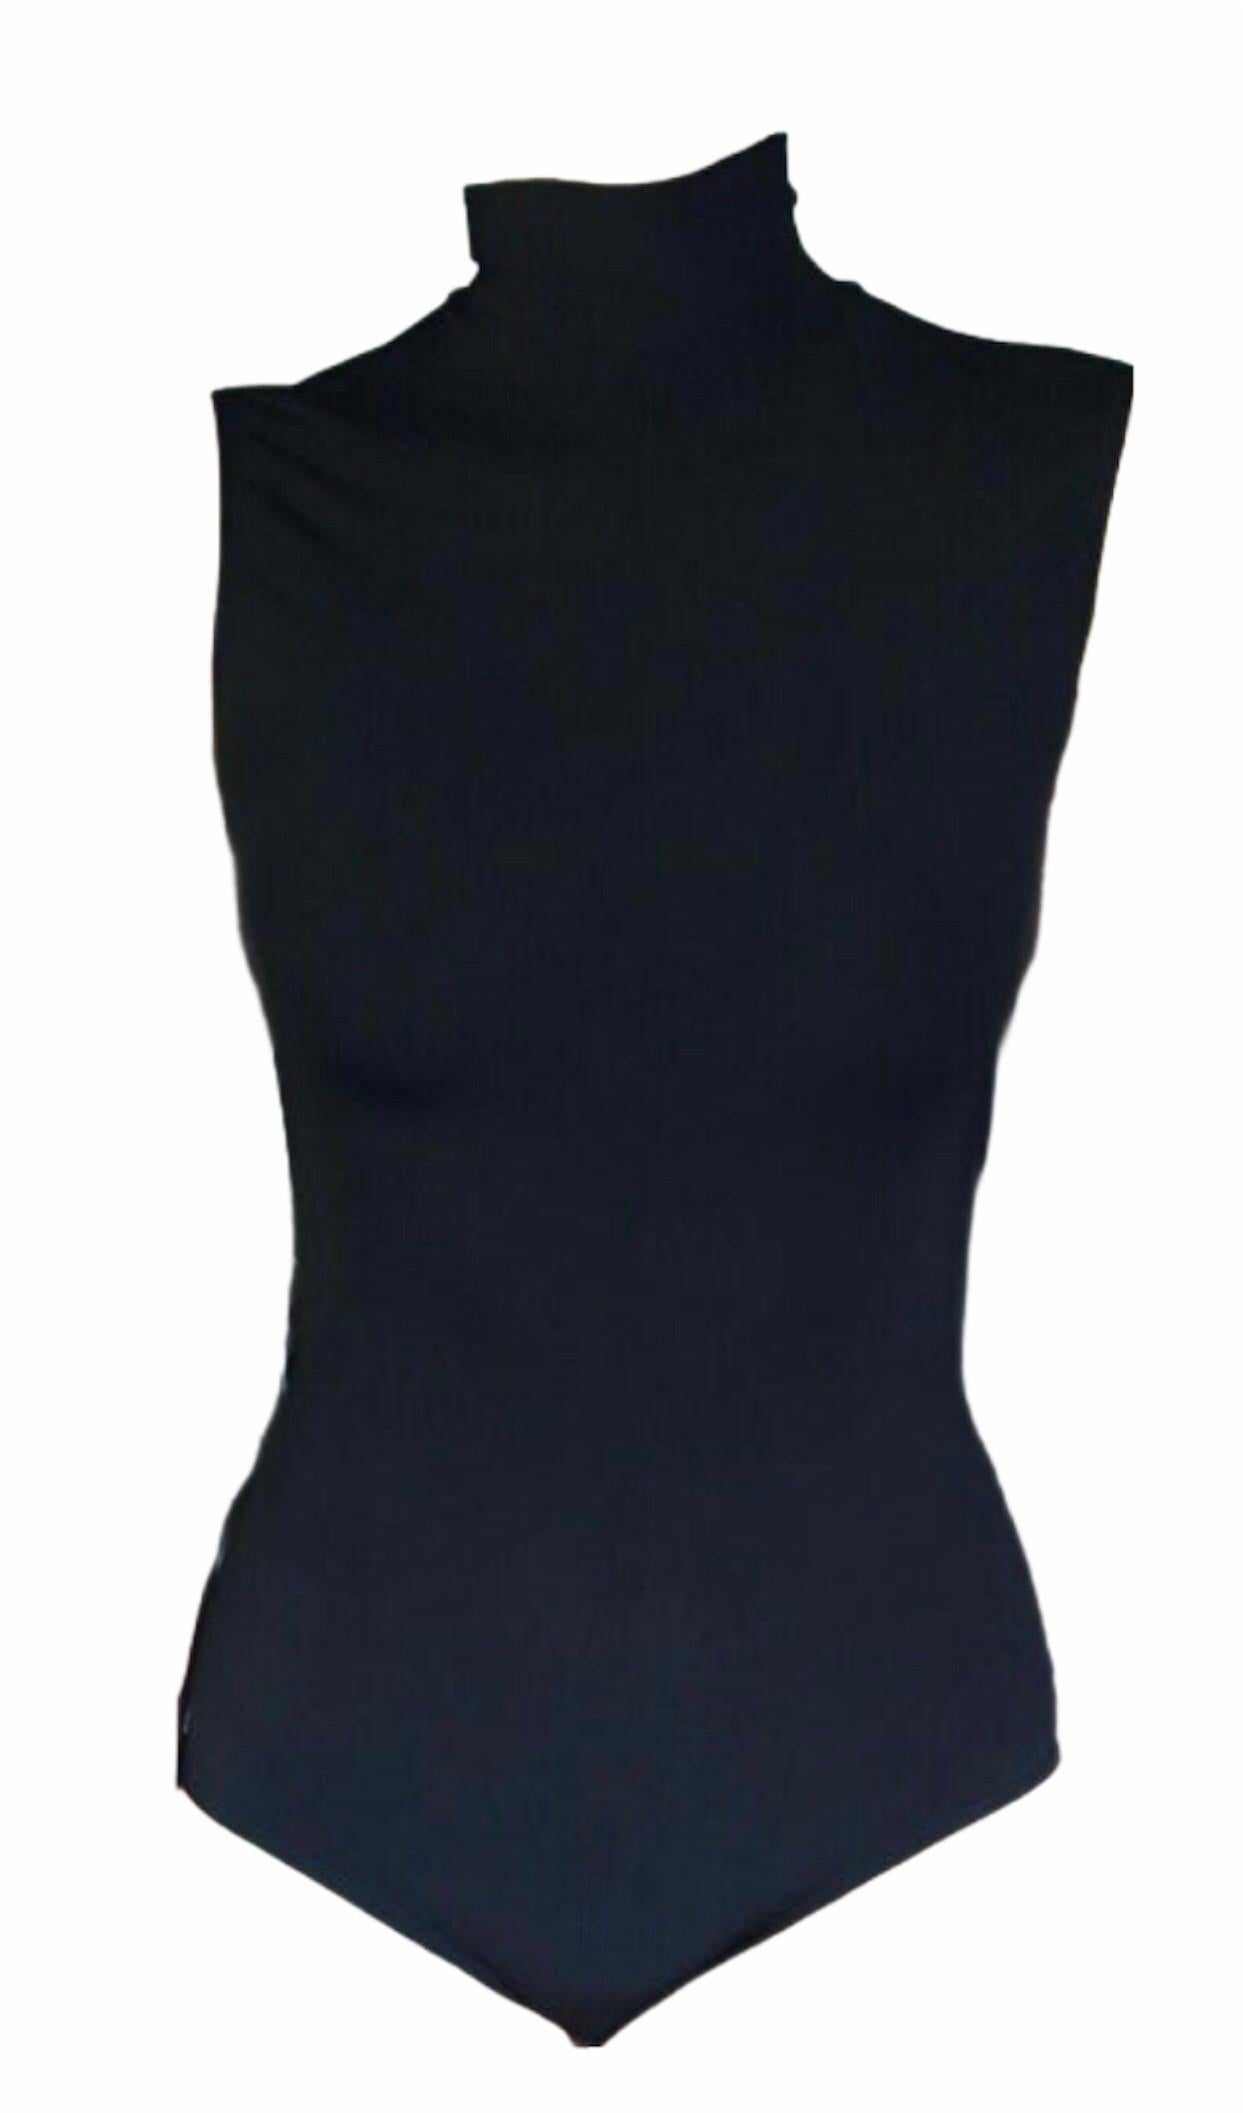 Chanel Cutout Back Black Swimsuit FR 36 US 4

Black Chanel one-piece swimsuit/bodysuit with mock neckline, open back and tonal matte CC logo button closures at nape.
